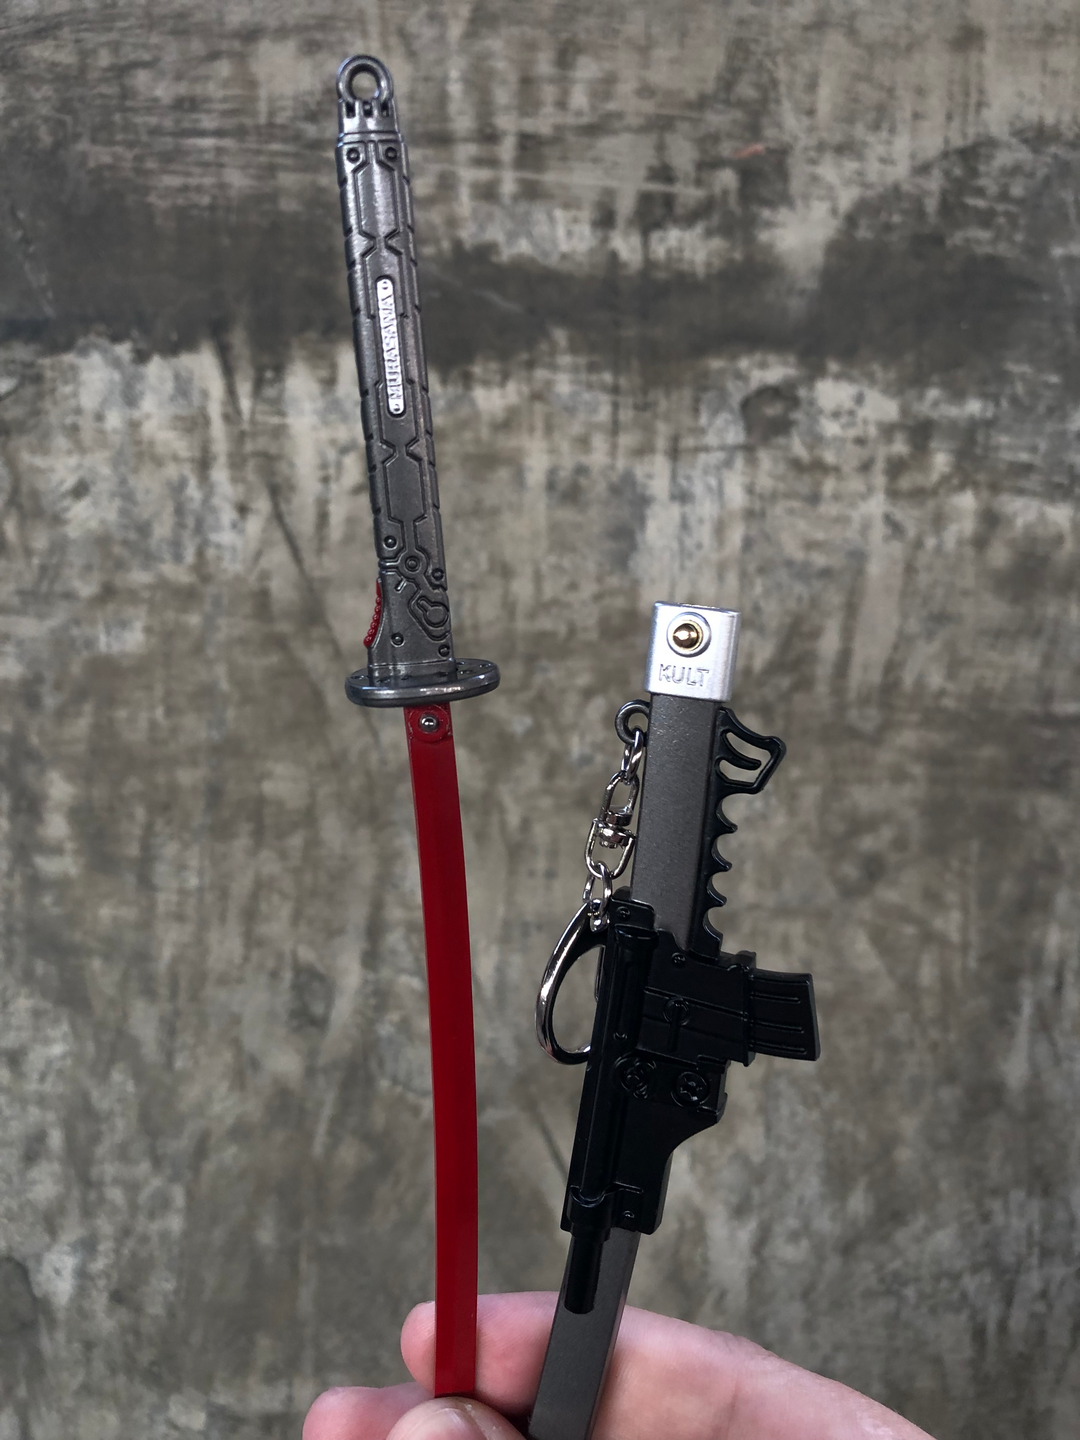  40 HF Murasama Foam Sword Fantasy Samurai Sword